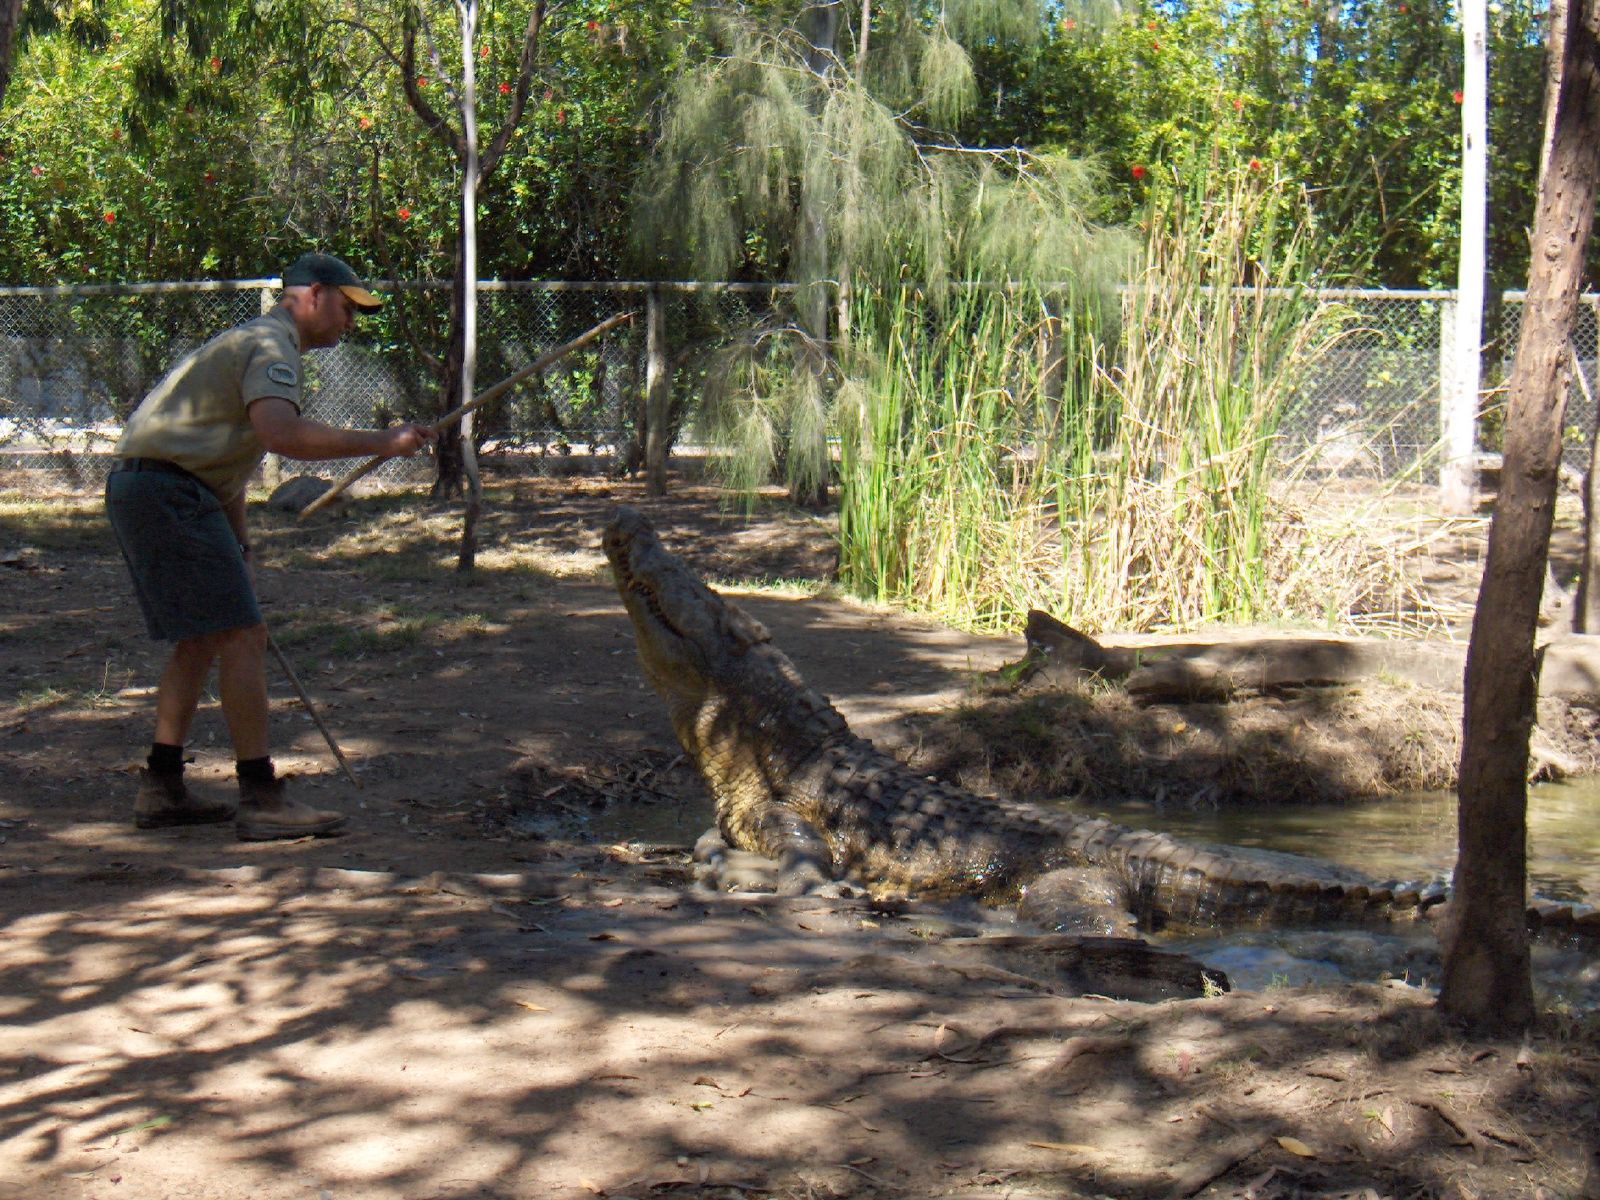 a man walks through a zoo exhibit with a crocodile